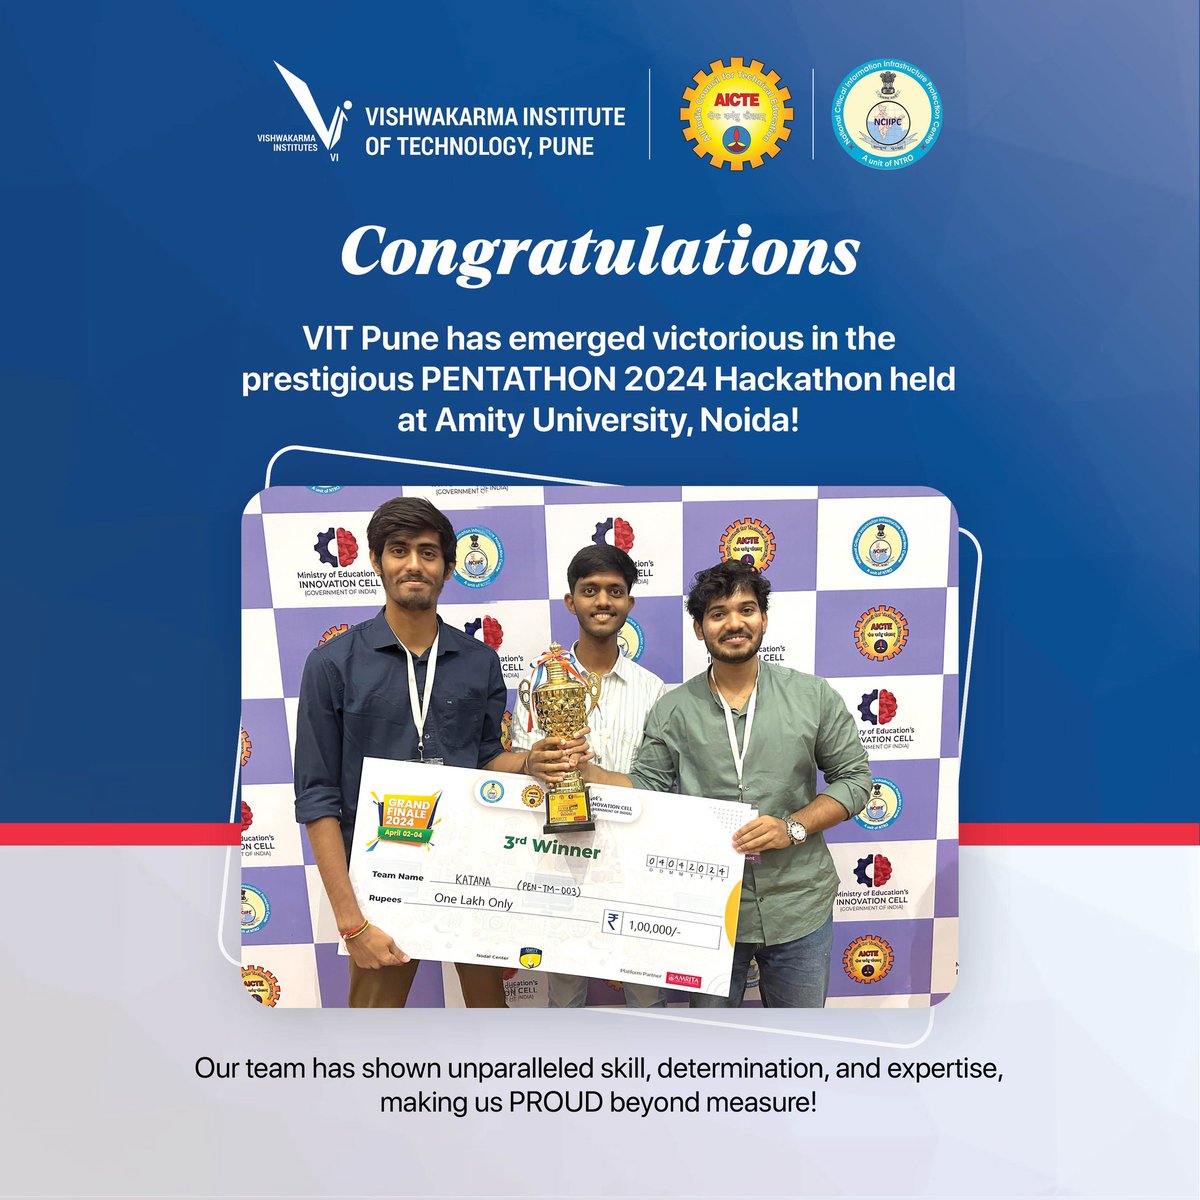 Congratulations!

VIT Pune has emerged victorious in the prestigious PENTATHON 2024 Hackathon held at Amity University, Noida! 

#VITPune #PENTATHON2024 #HackathonVictory #AmityUniversity #Noida #TechTriumph #VictoriousVIT #HackathonWin #InnovationChampions #TechCompetition